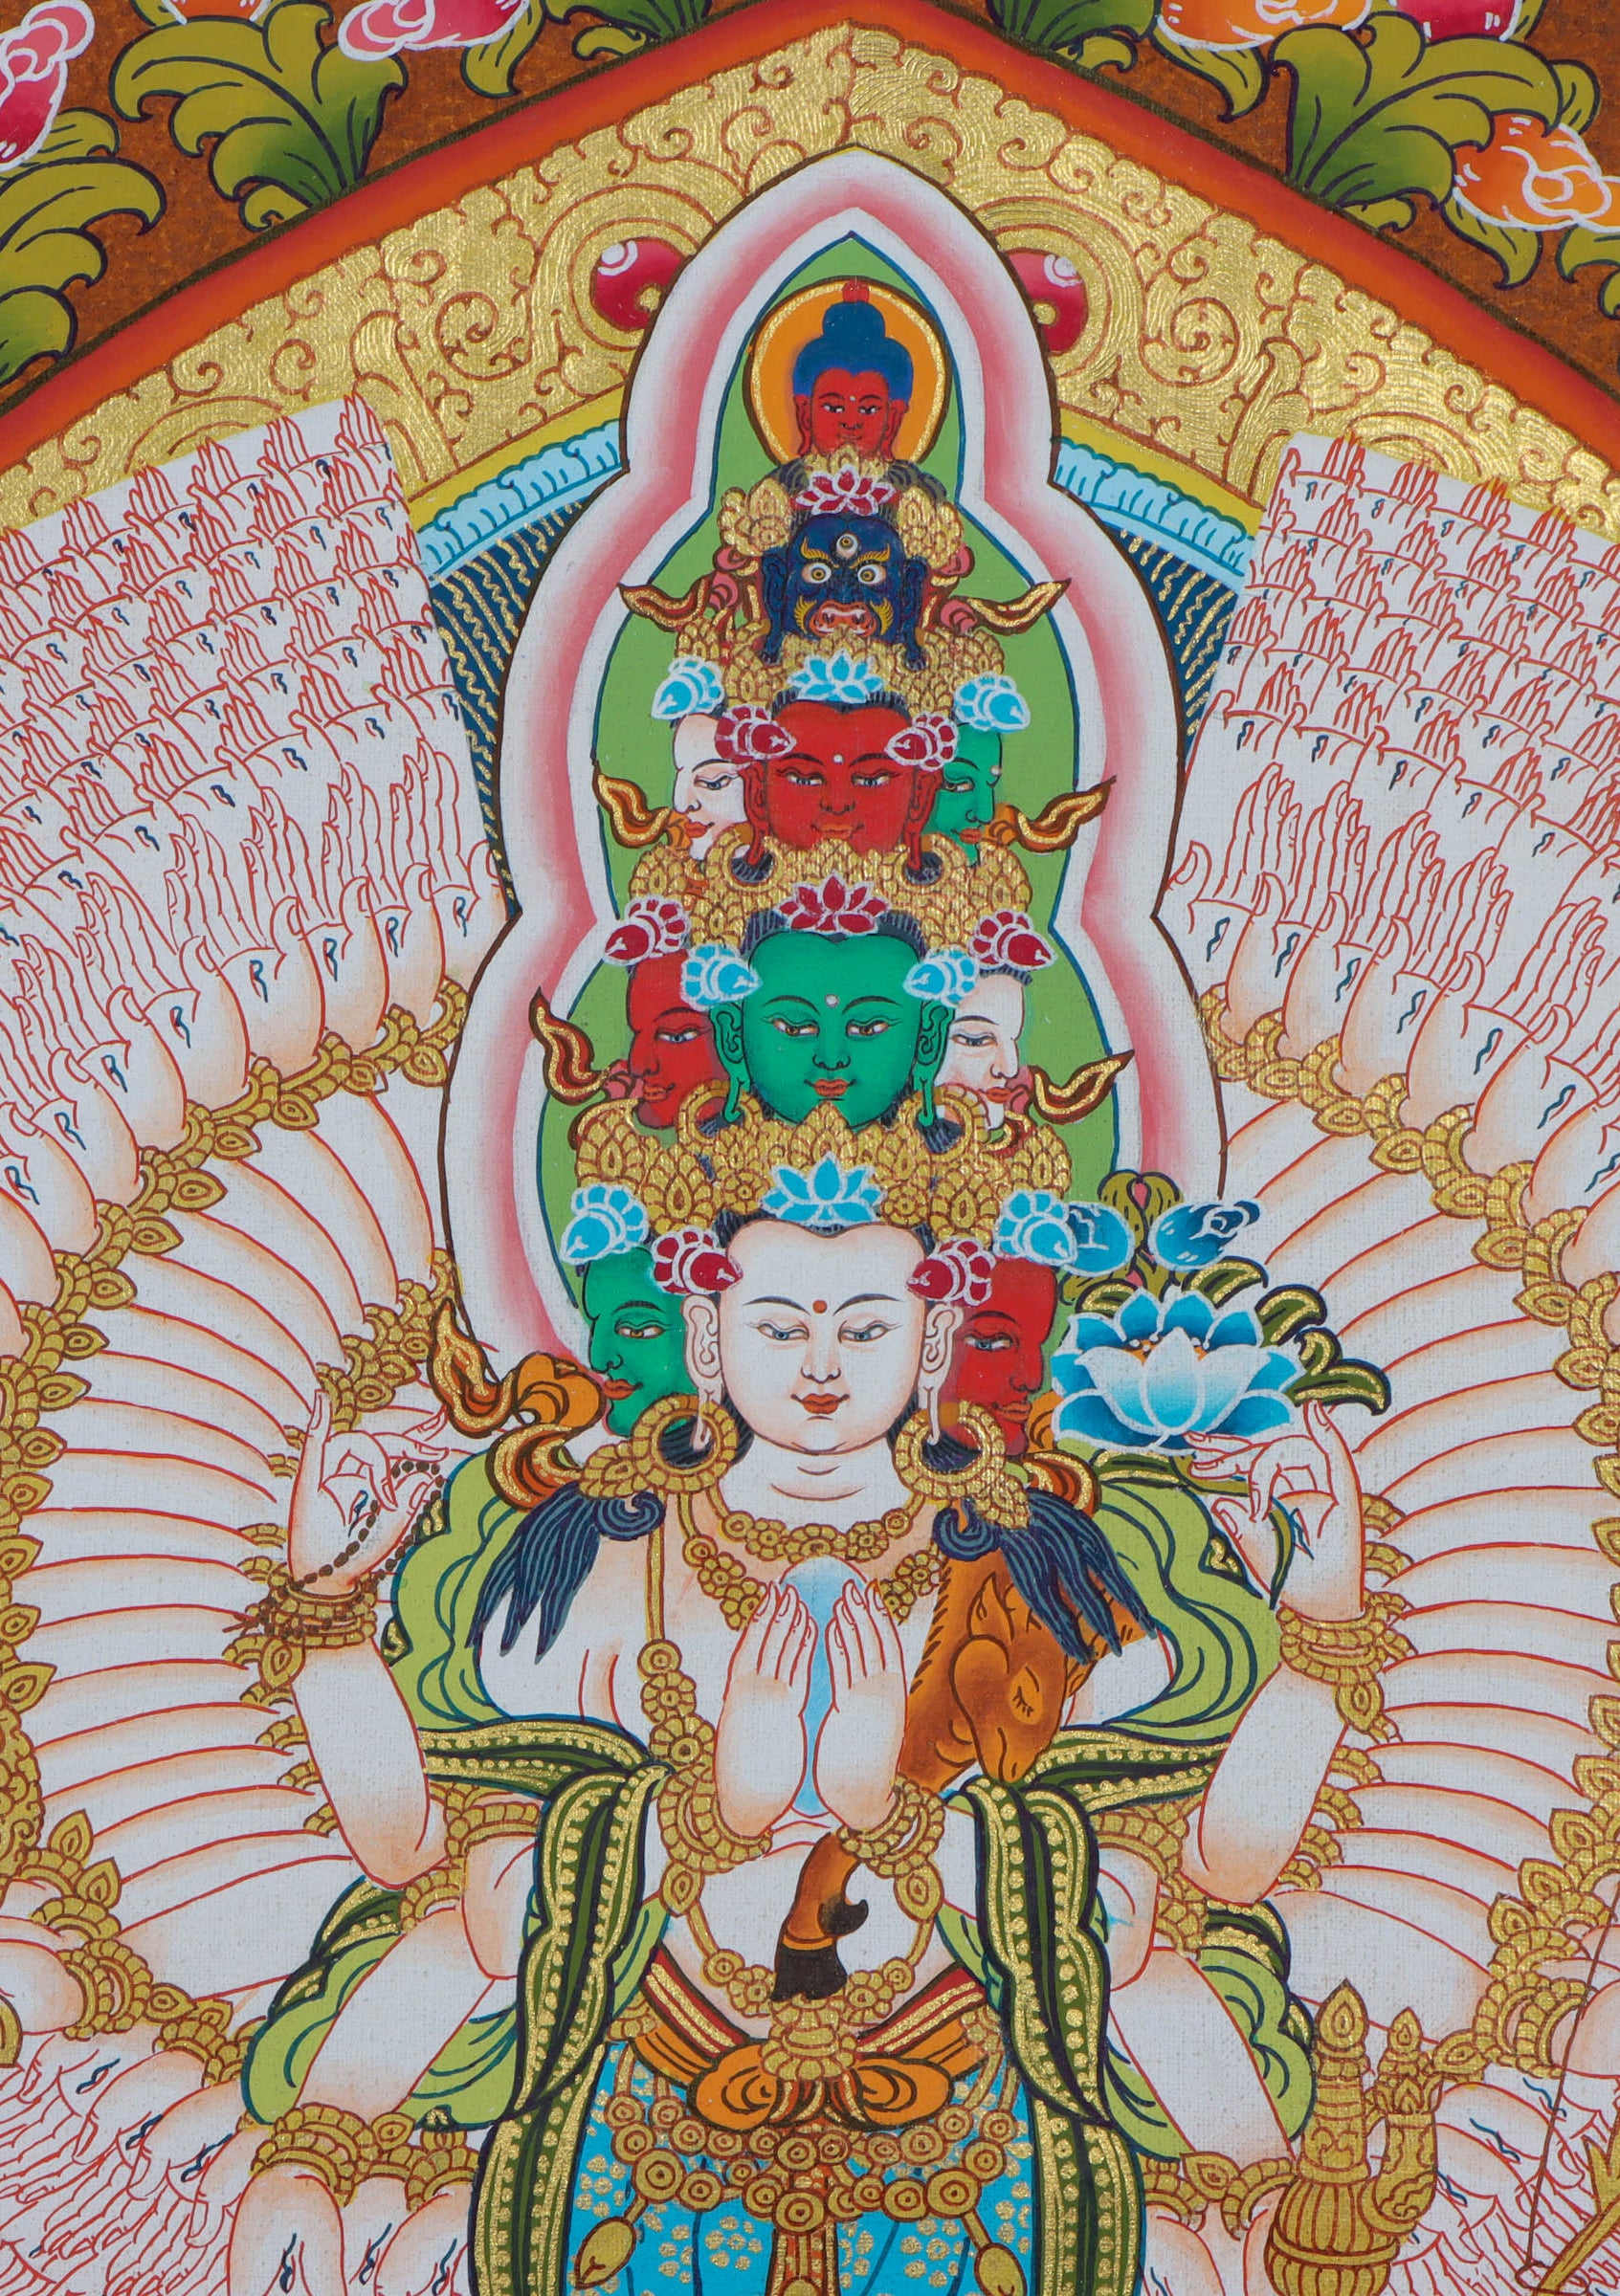 1000 arms Lokeshwor Thangka Painting - Handpainted by skillful artisan - Lucky Thanka